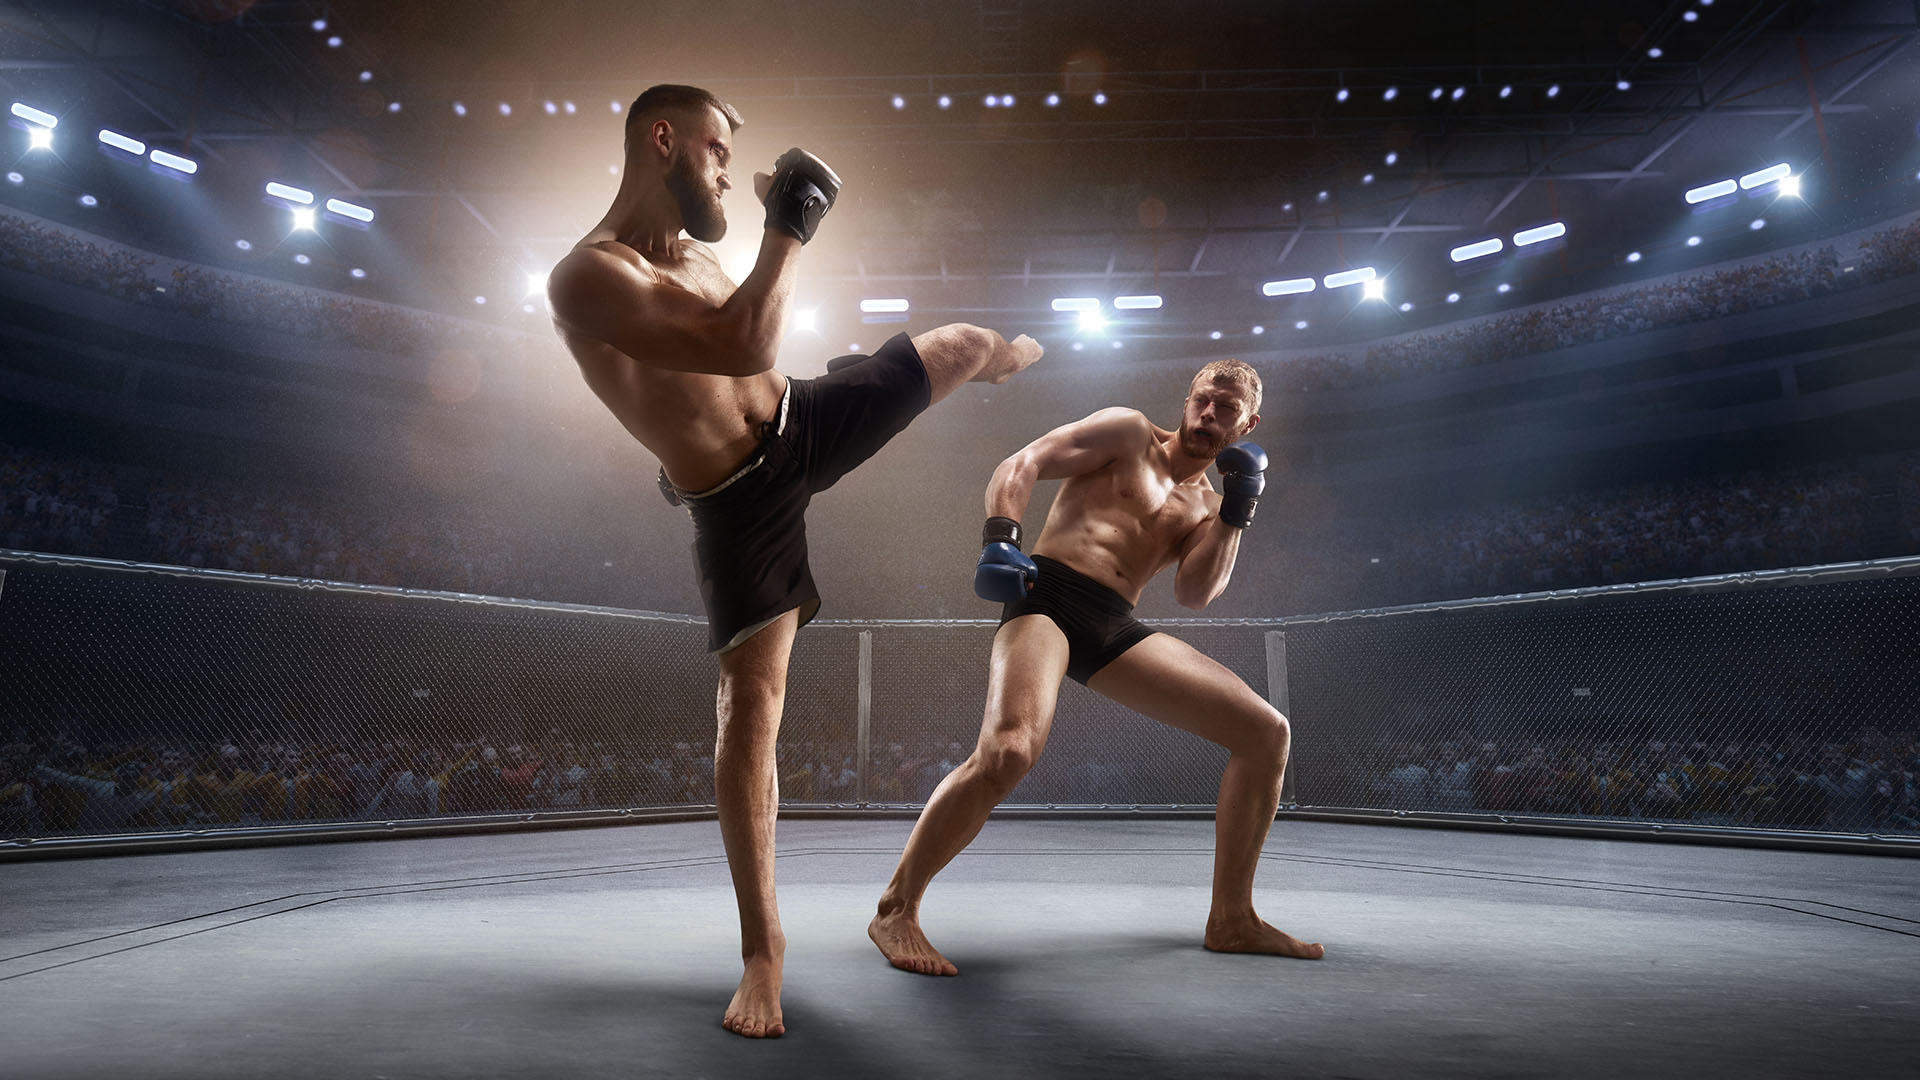 UFC-Kämpfe live streamen auf DAZN mit waipu HD and per App